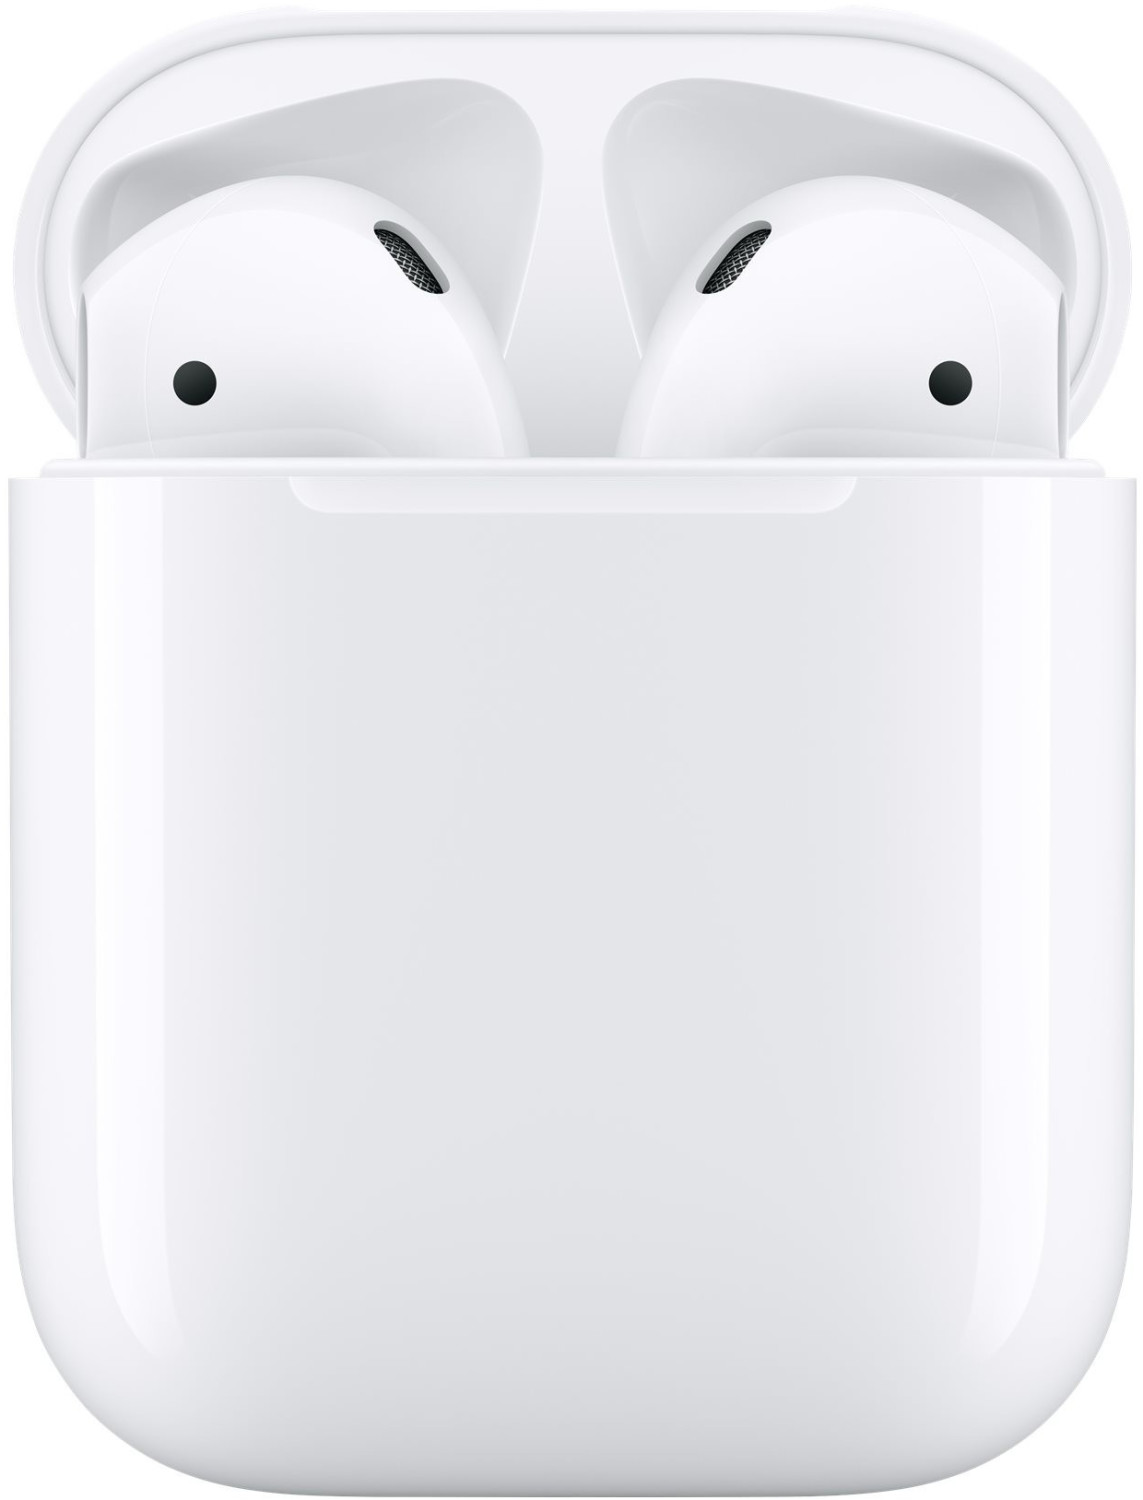 Apple AirPods 2 (2019) mit Kabel-Ladecase